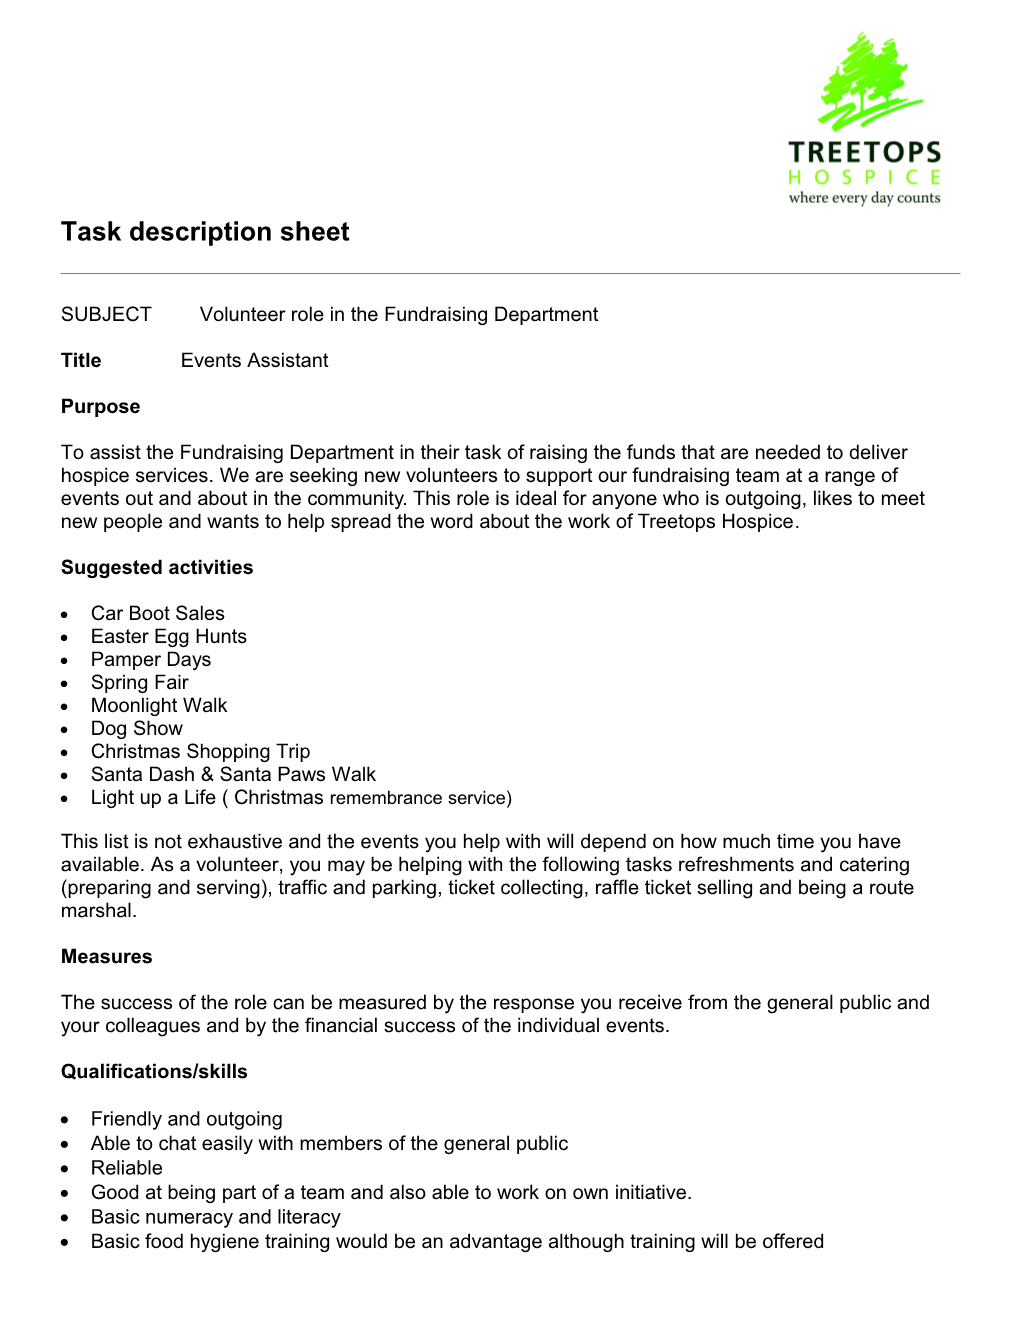 Task Description Sheet